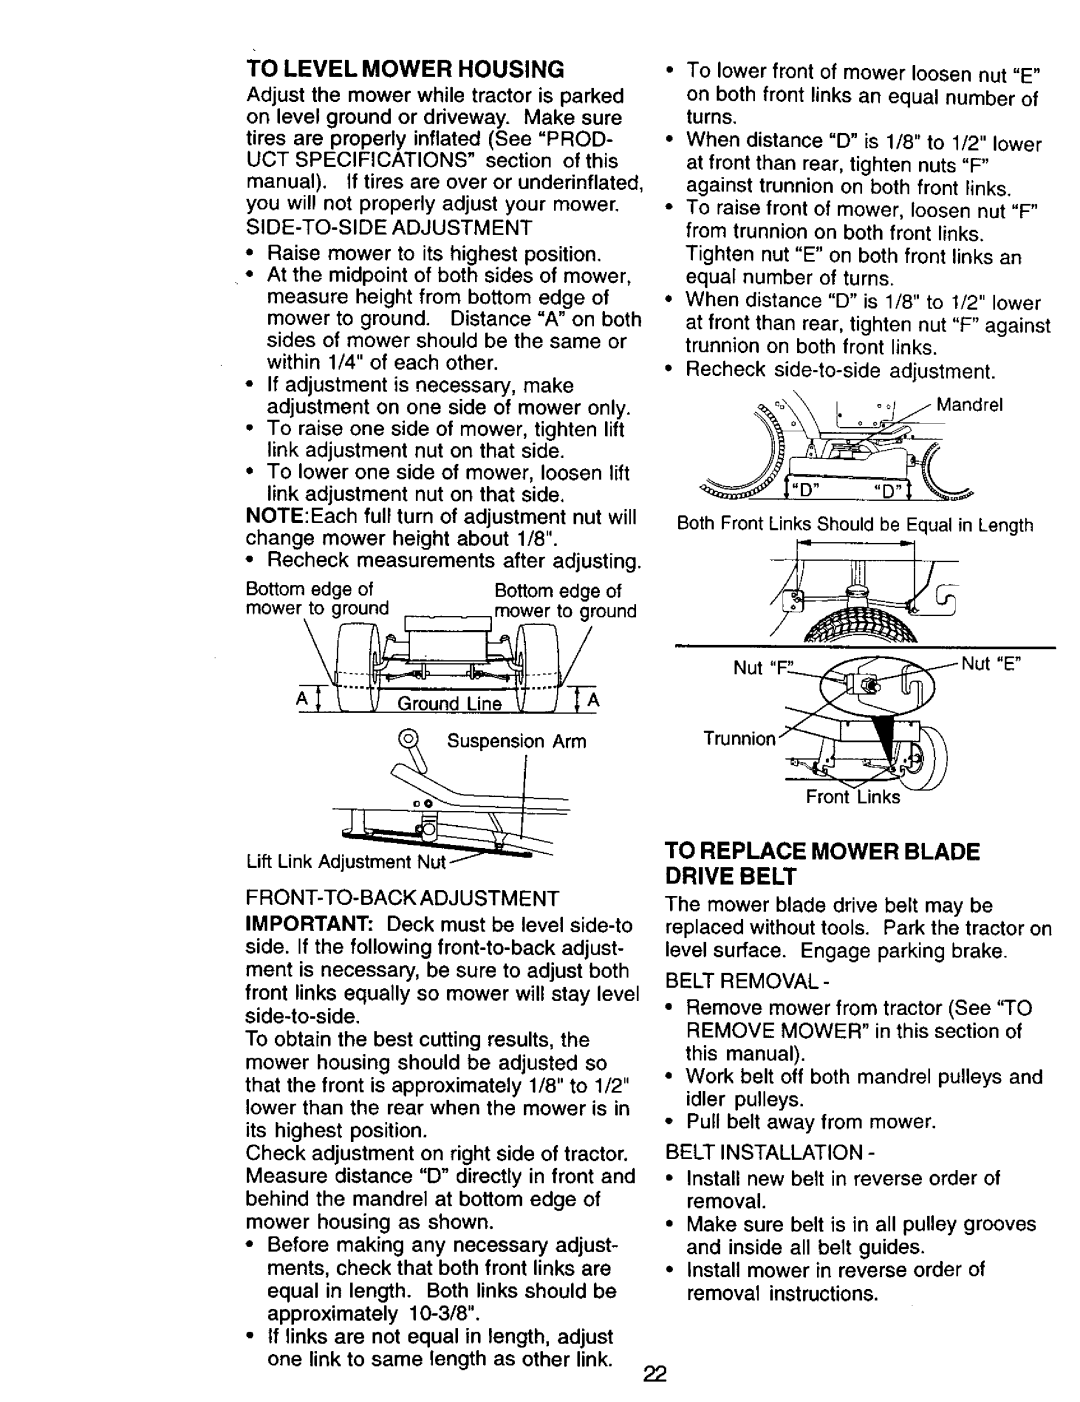 Craftsman 917.271142 manual To Level Mower Housing, To Replace Mower Blade Drive Belt 